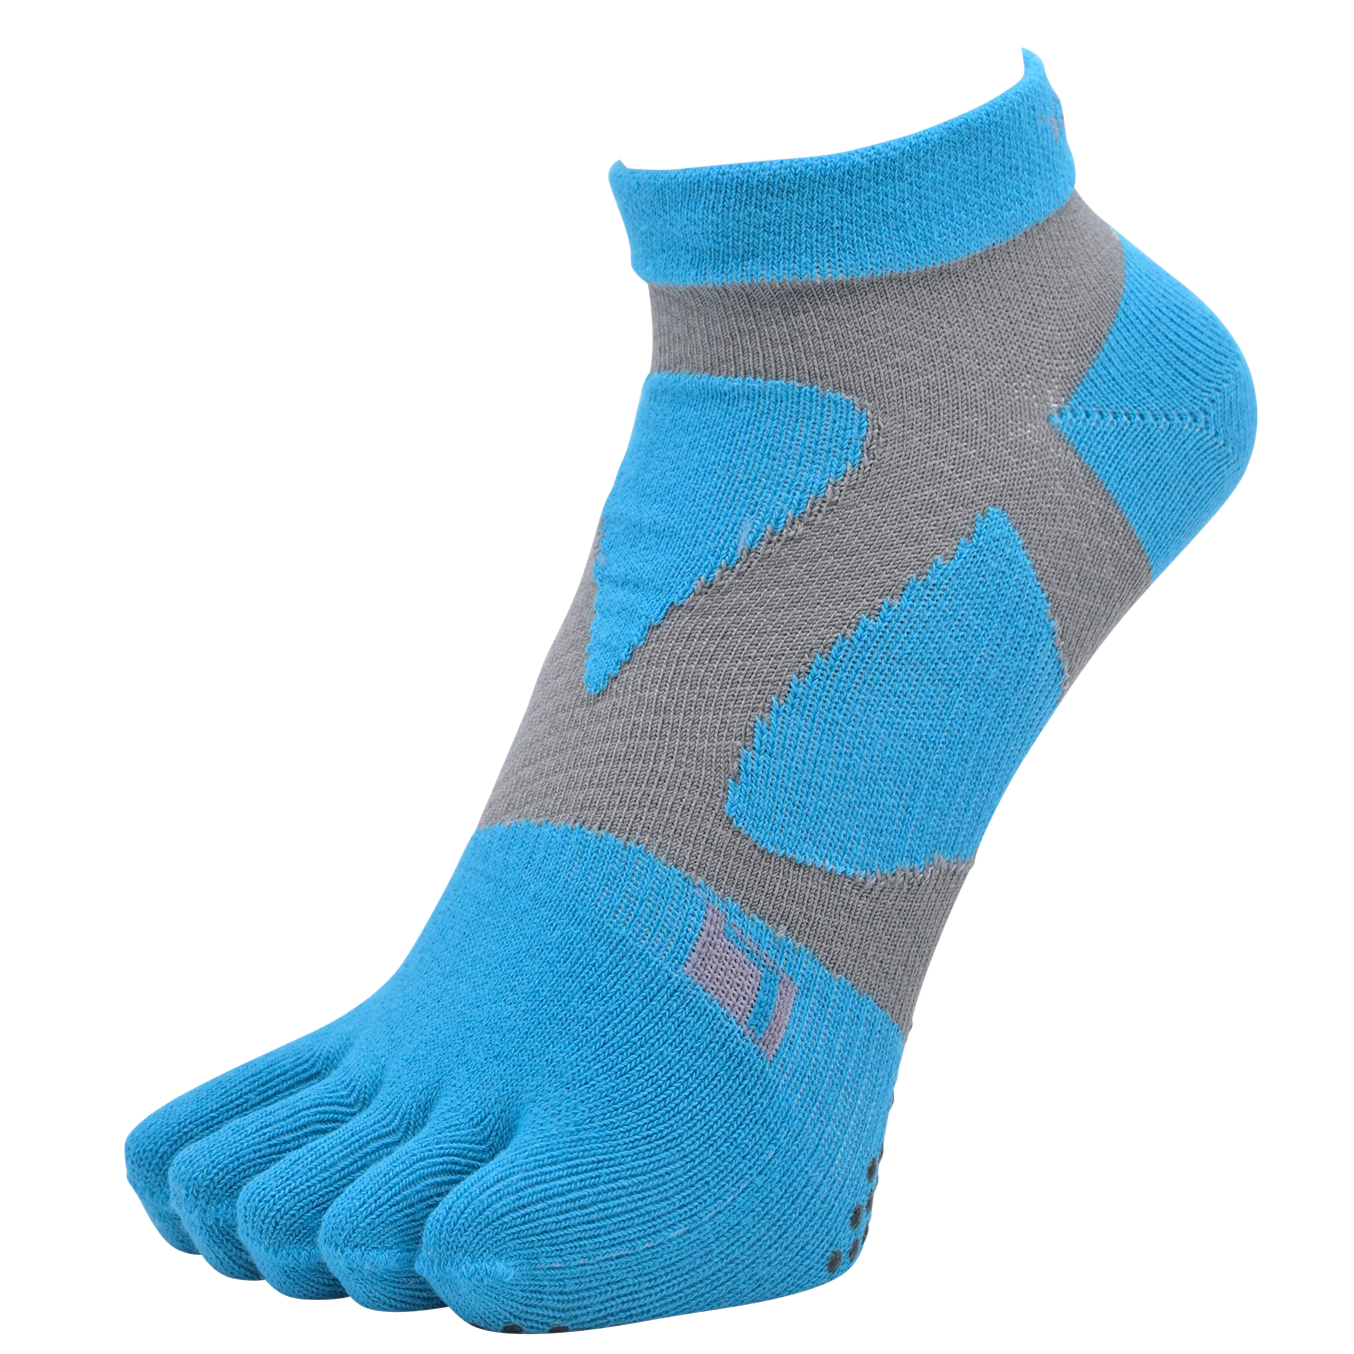 YAMAtune - Spider-Arch Compression - Short 5-Toe Socks - Non-Slip Dots - Turquoise/Grey